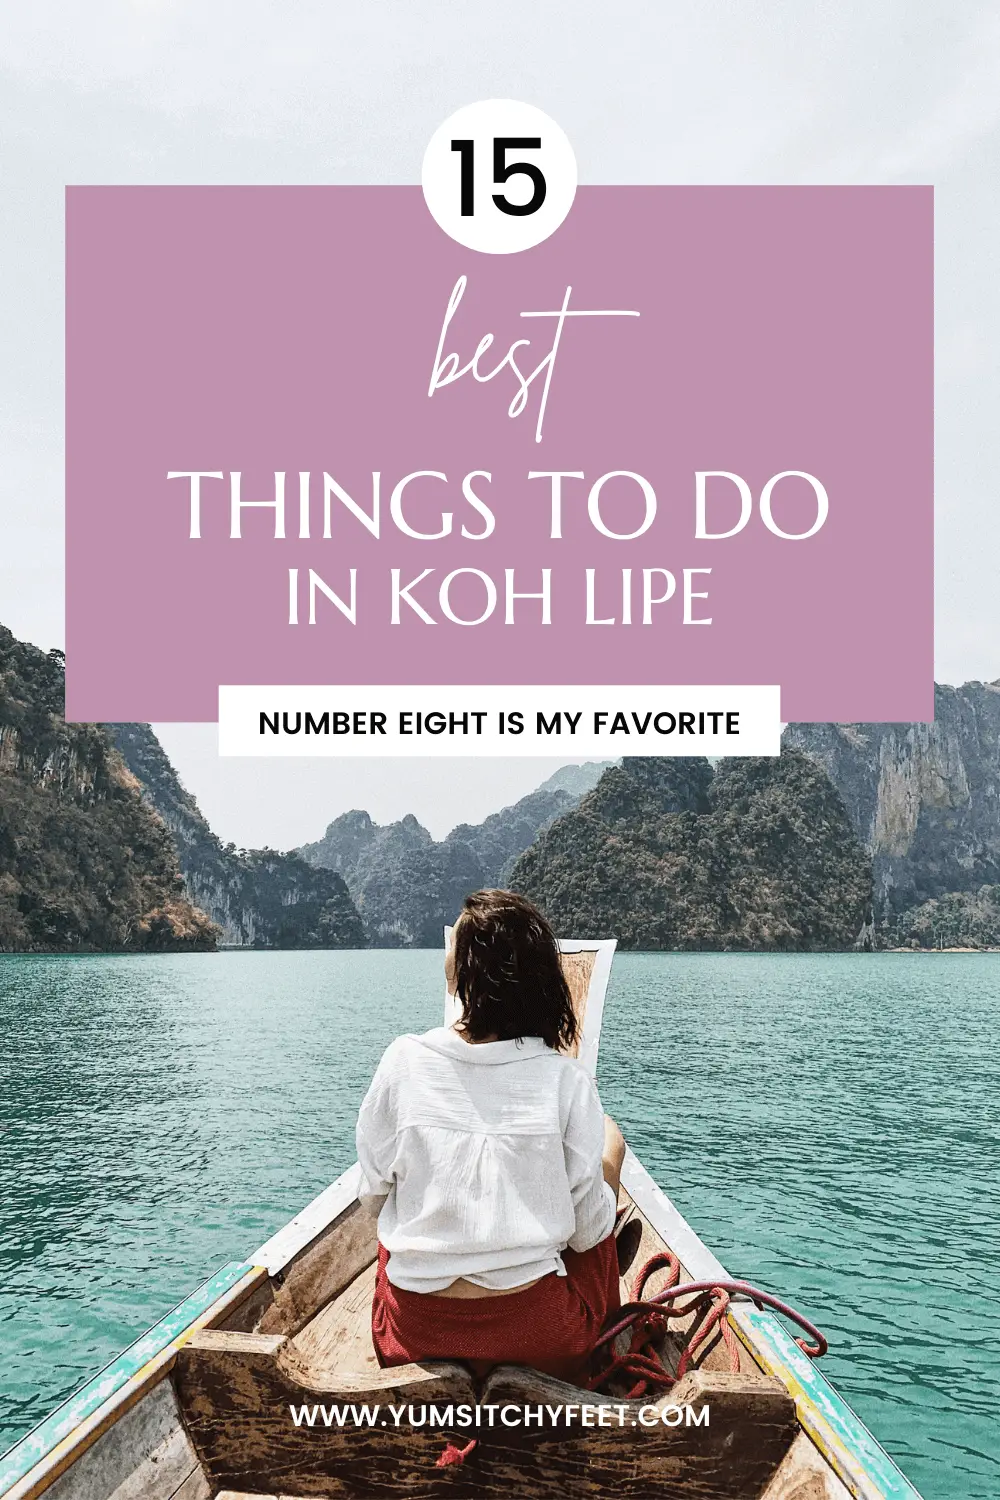 Things To Do In Koh Lipe 2